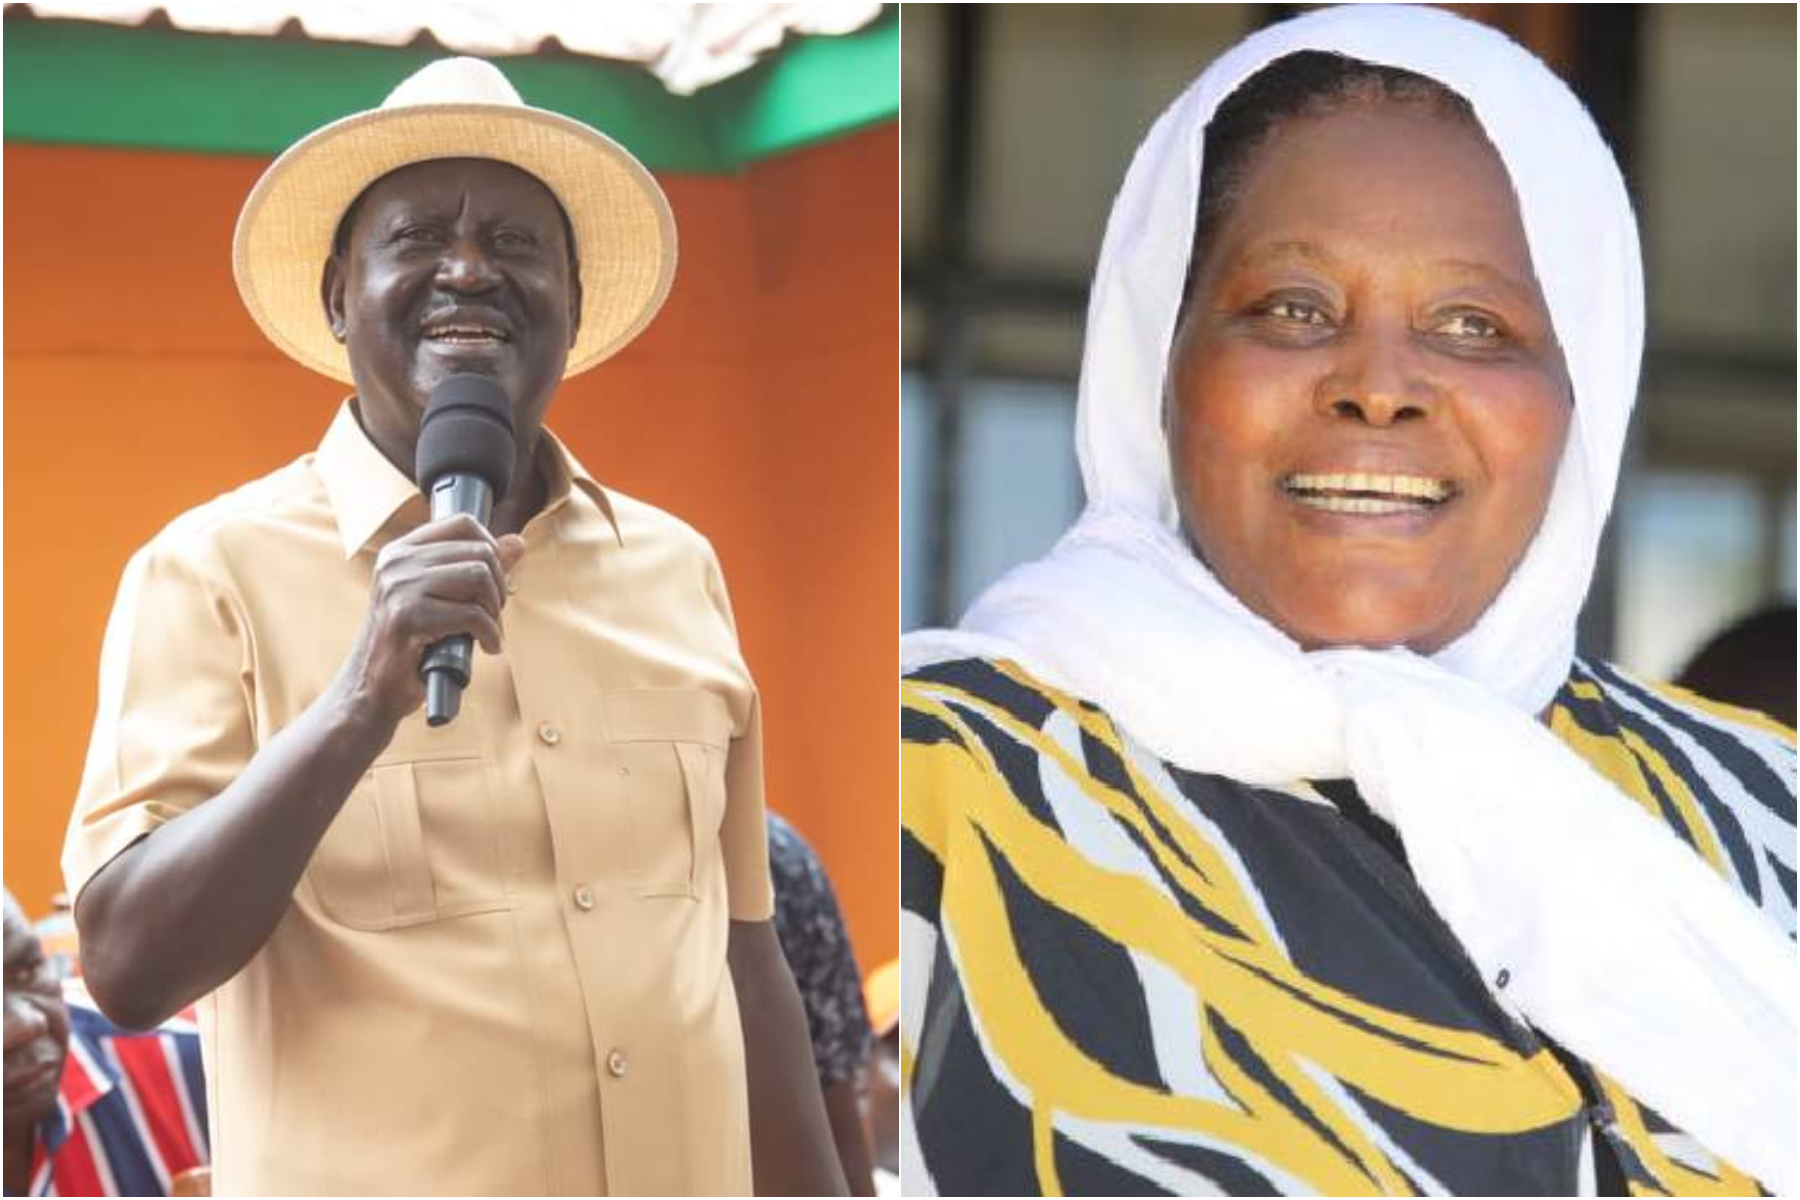 Photocollage of Raila Odinga and Anne Njeri.